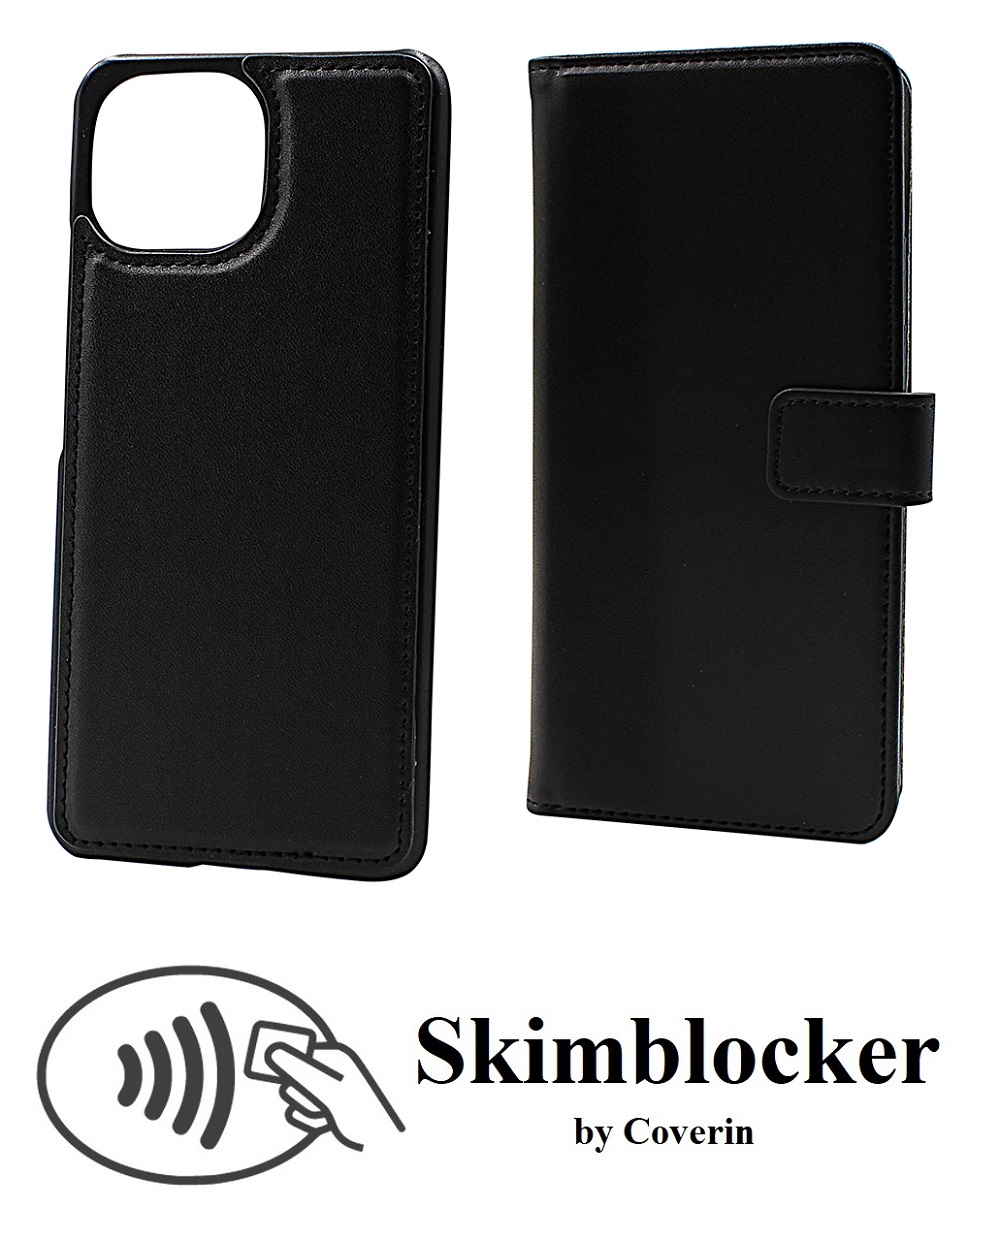 CoverInSkimblocker Magnet Fodral Xiaomi 11 Lite NE 5G / 11 Lite 5G NE